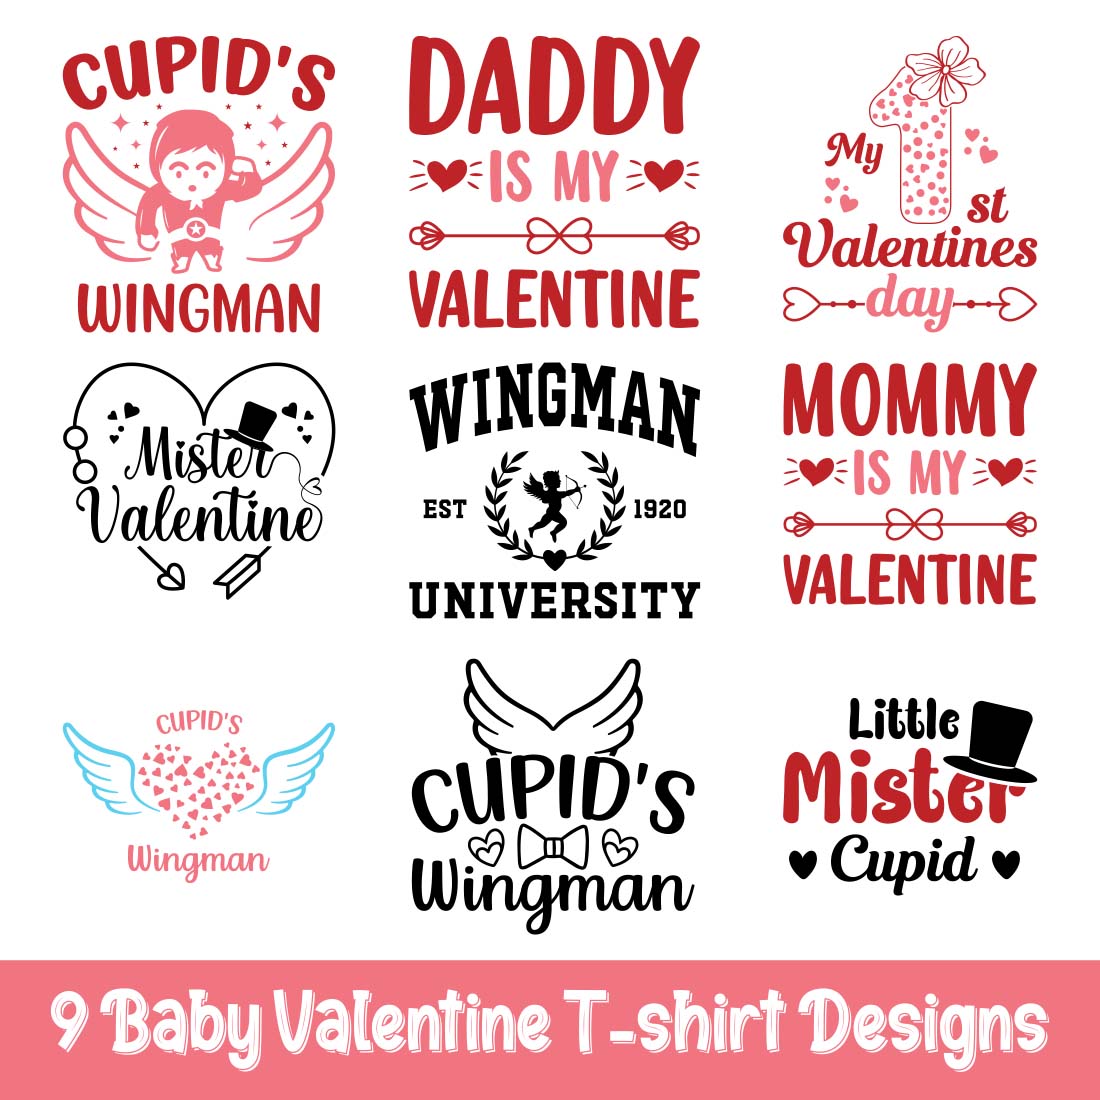 Baby Valentine T-shirt Bundle cover image.